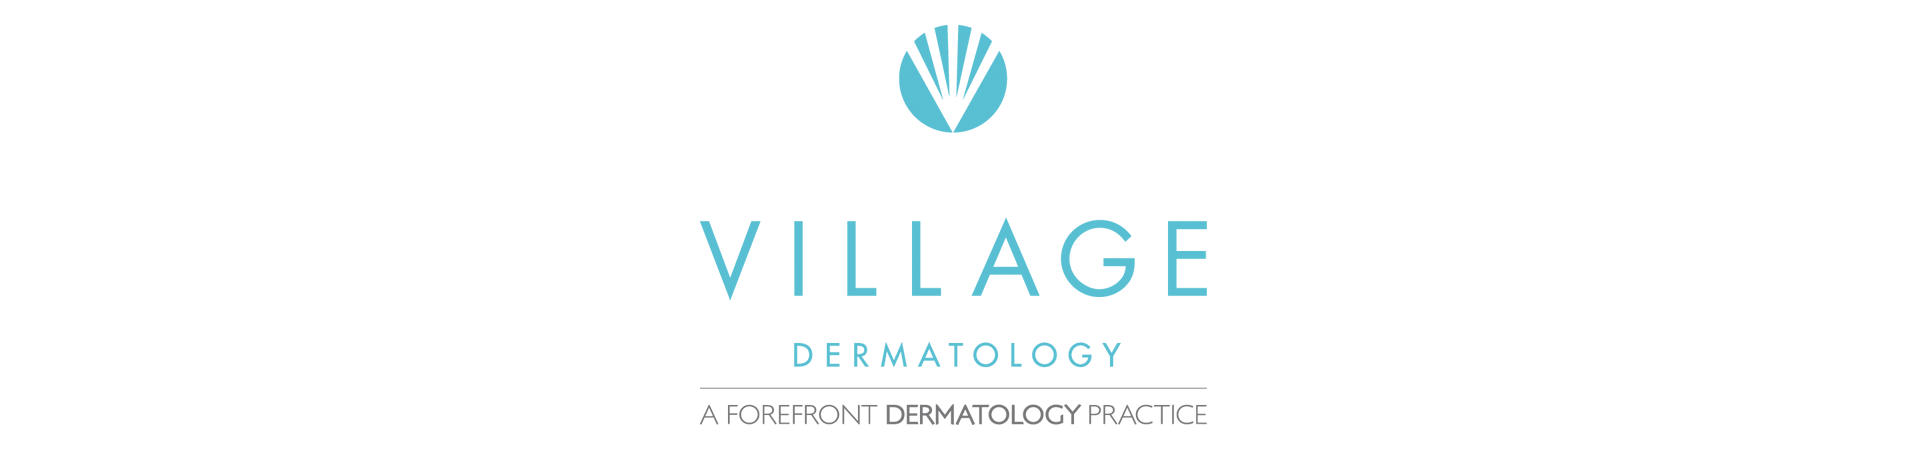 Village Dermatology Logo